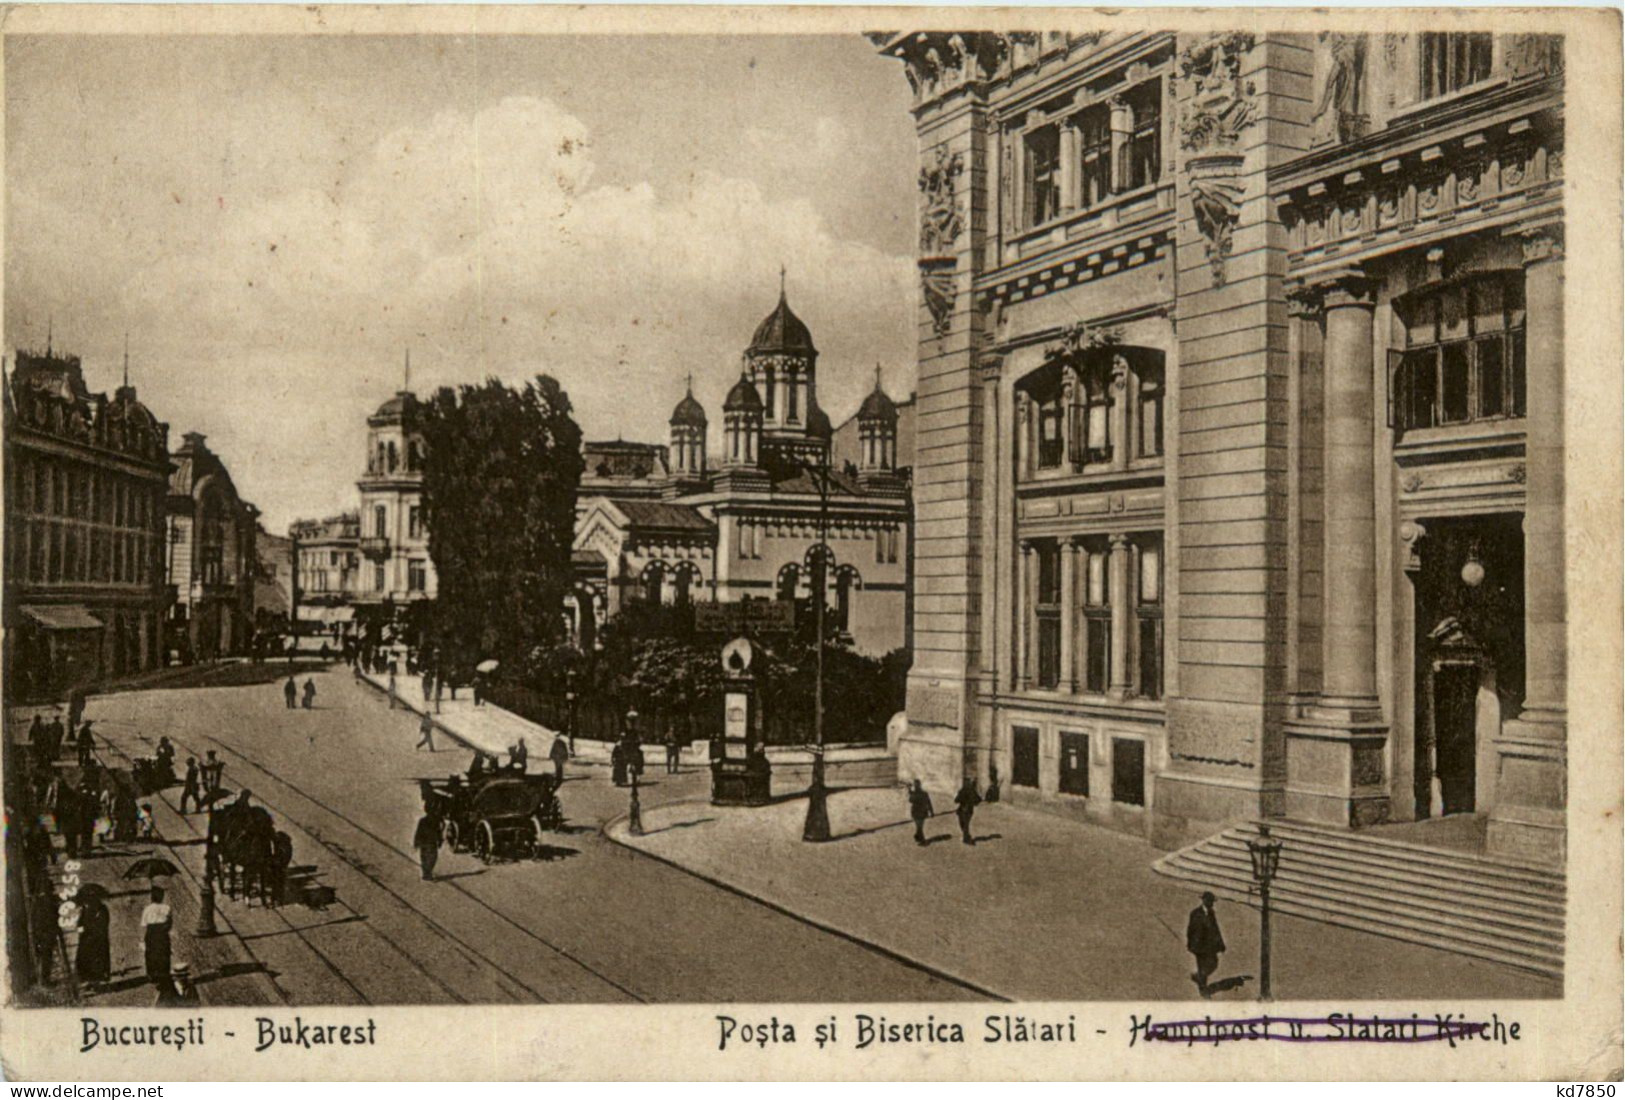 Bukarest - Posta Si Biserica Slatari - Romania